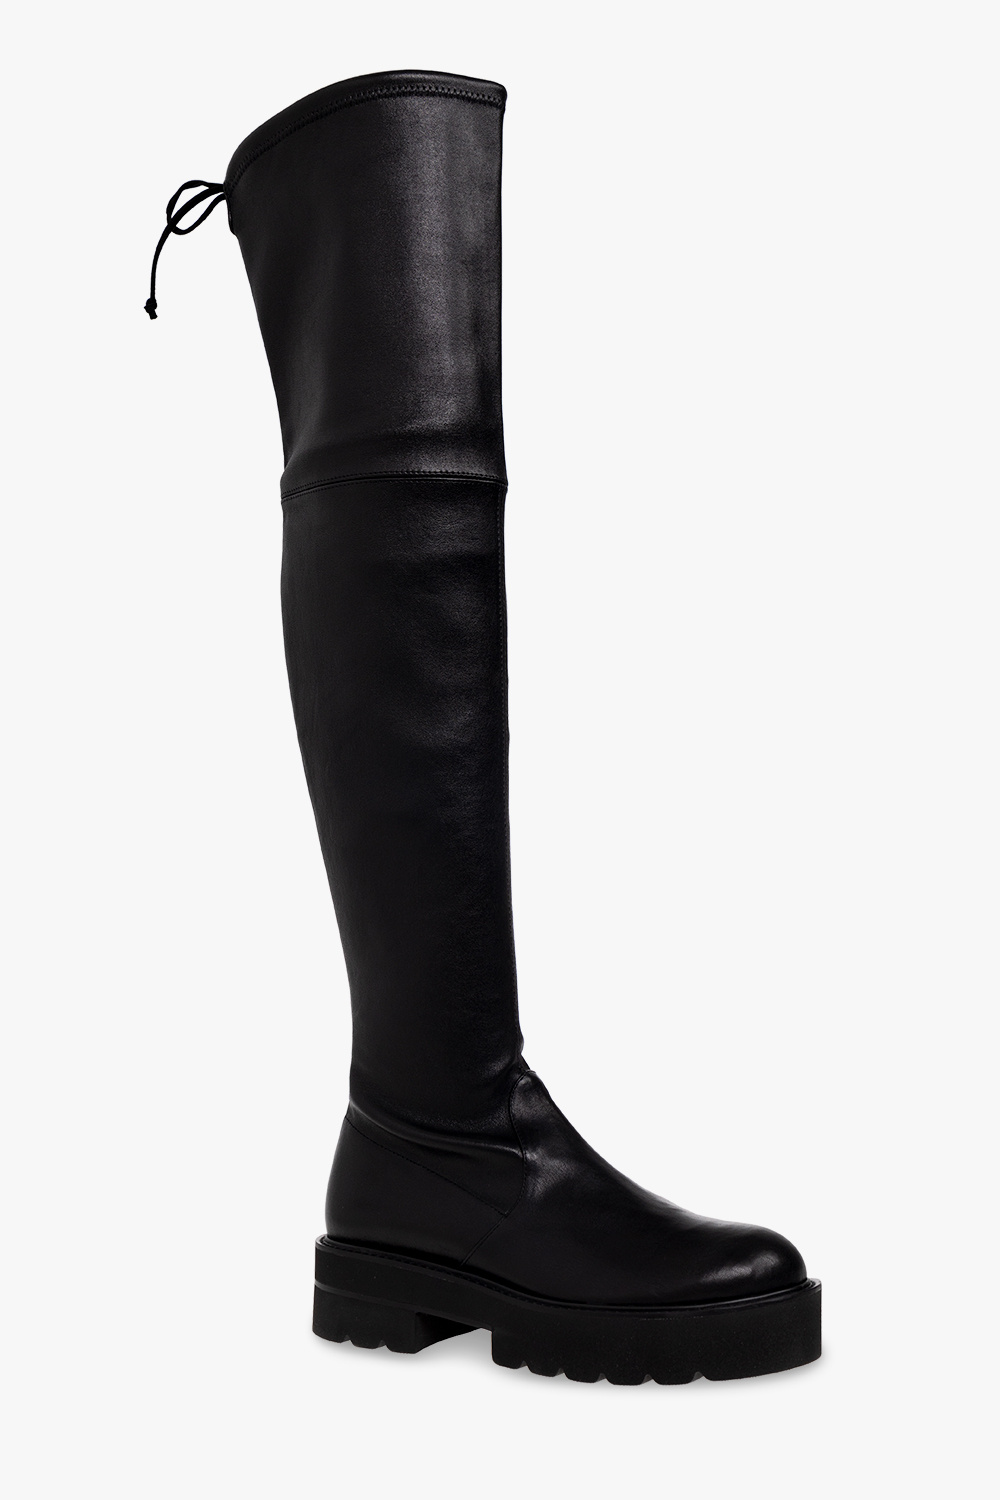 Stuart Weitzman ‘Lowland’ leather boots